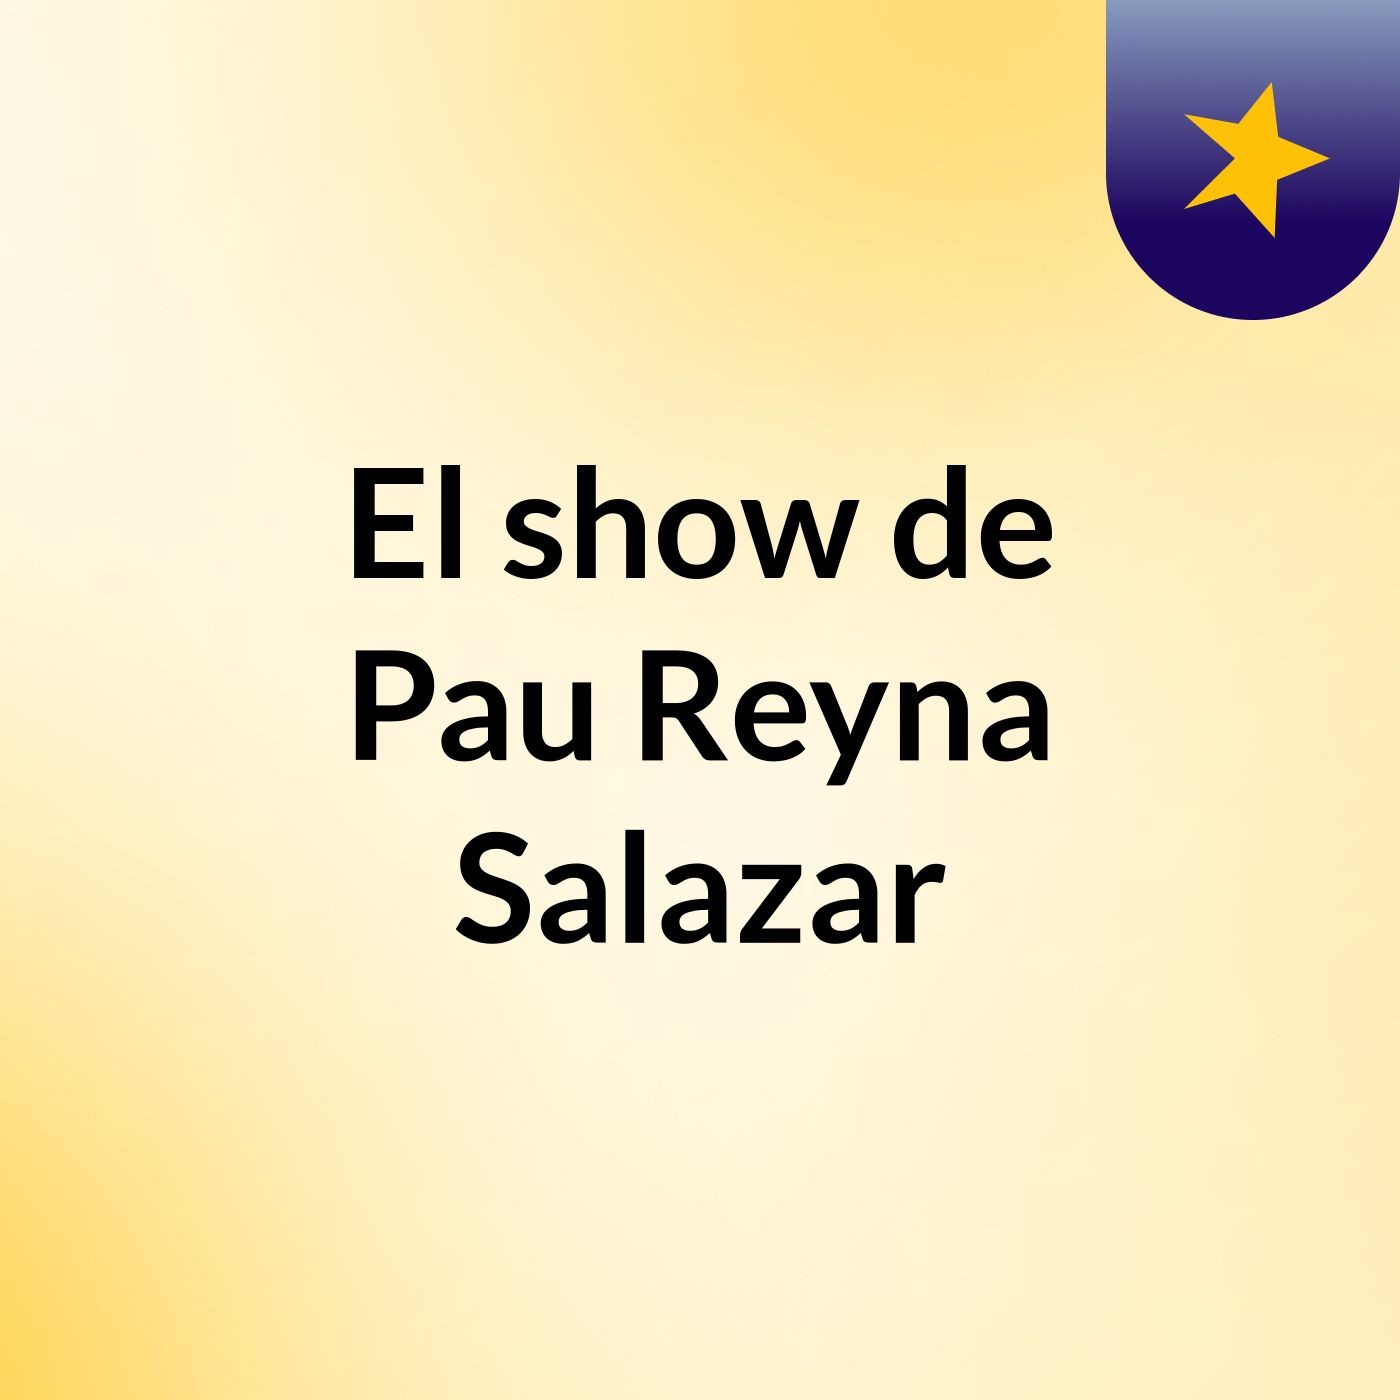 El show de Pau Reyna Salazar